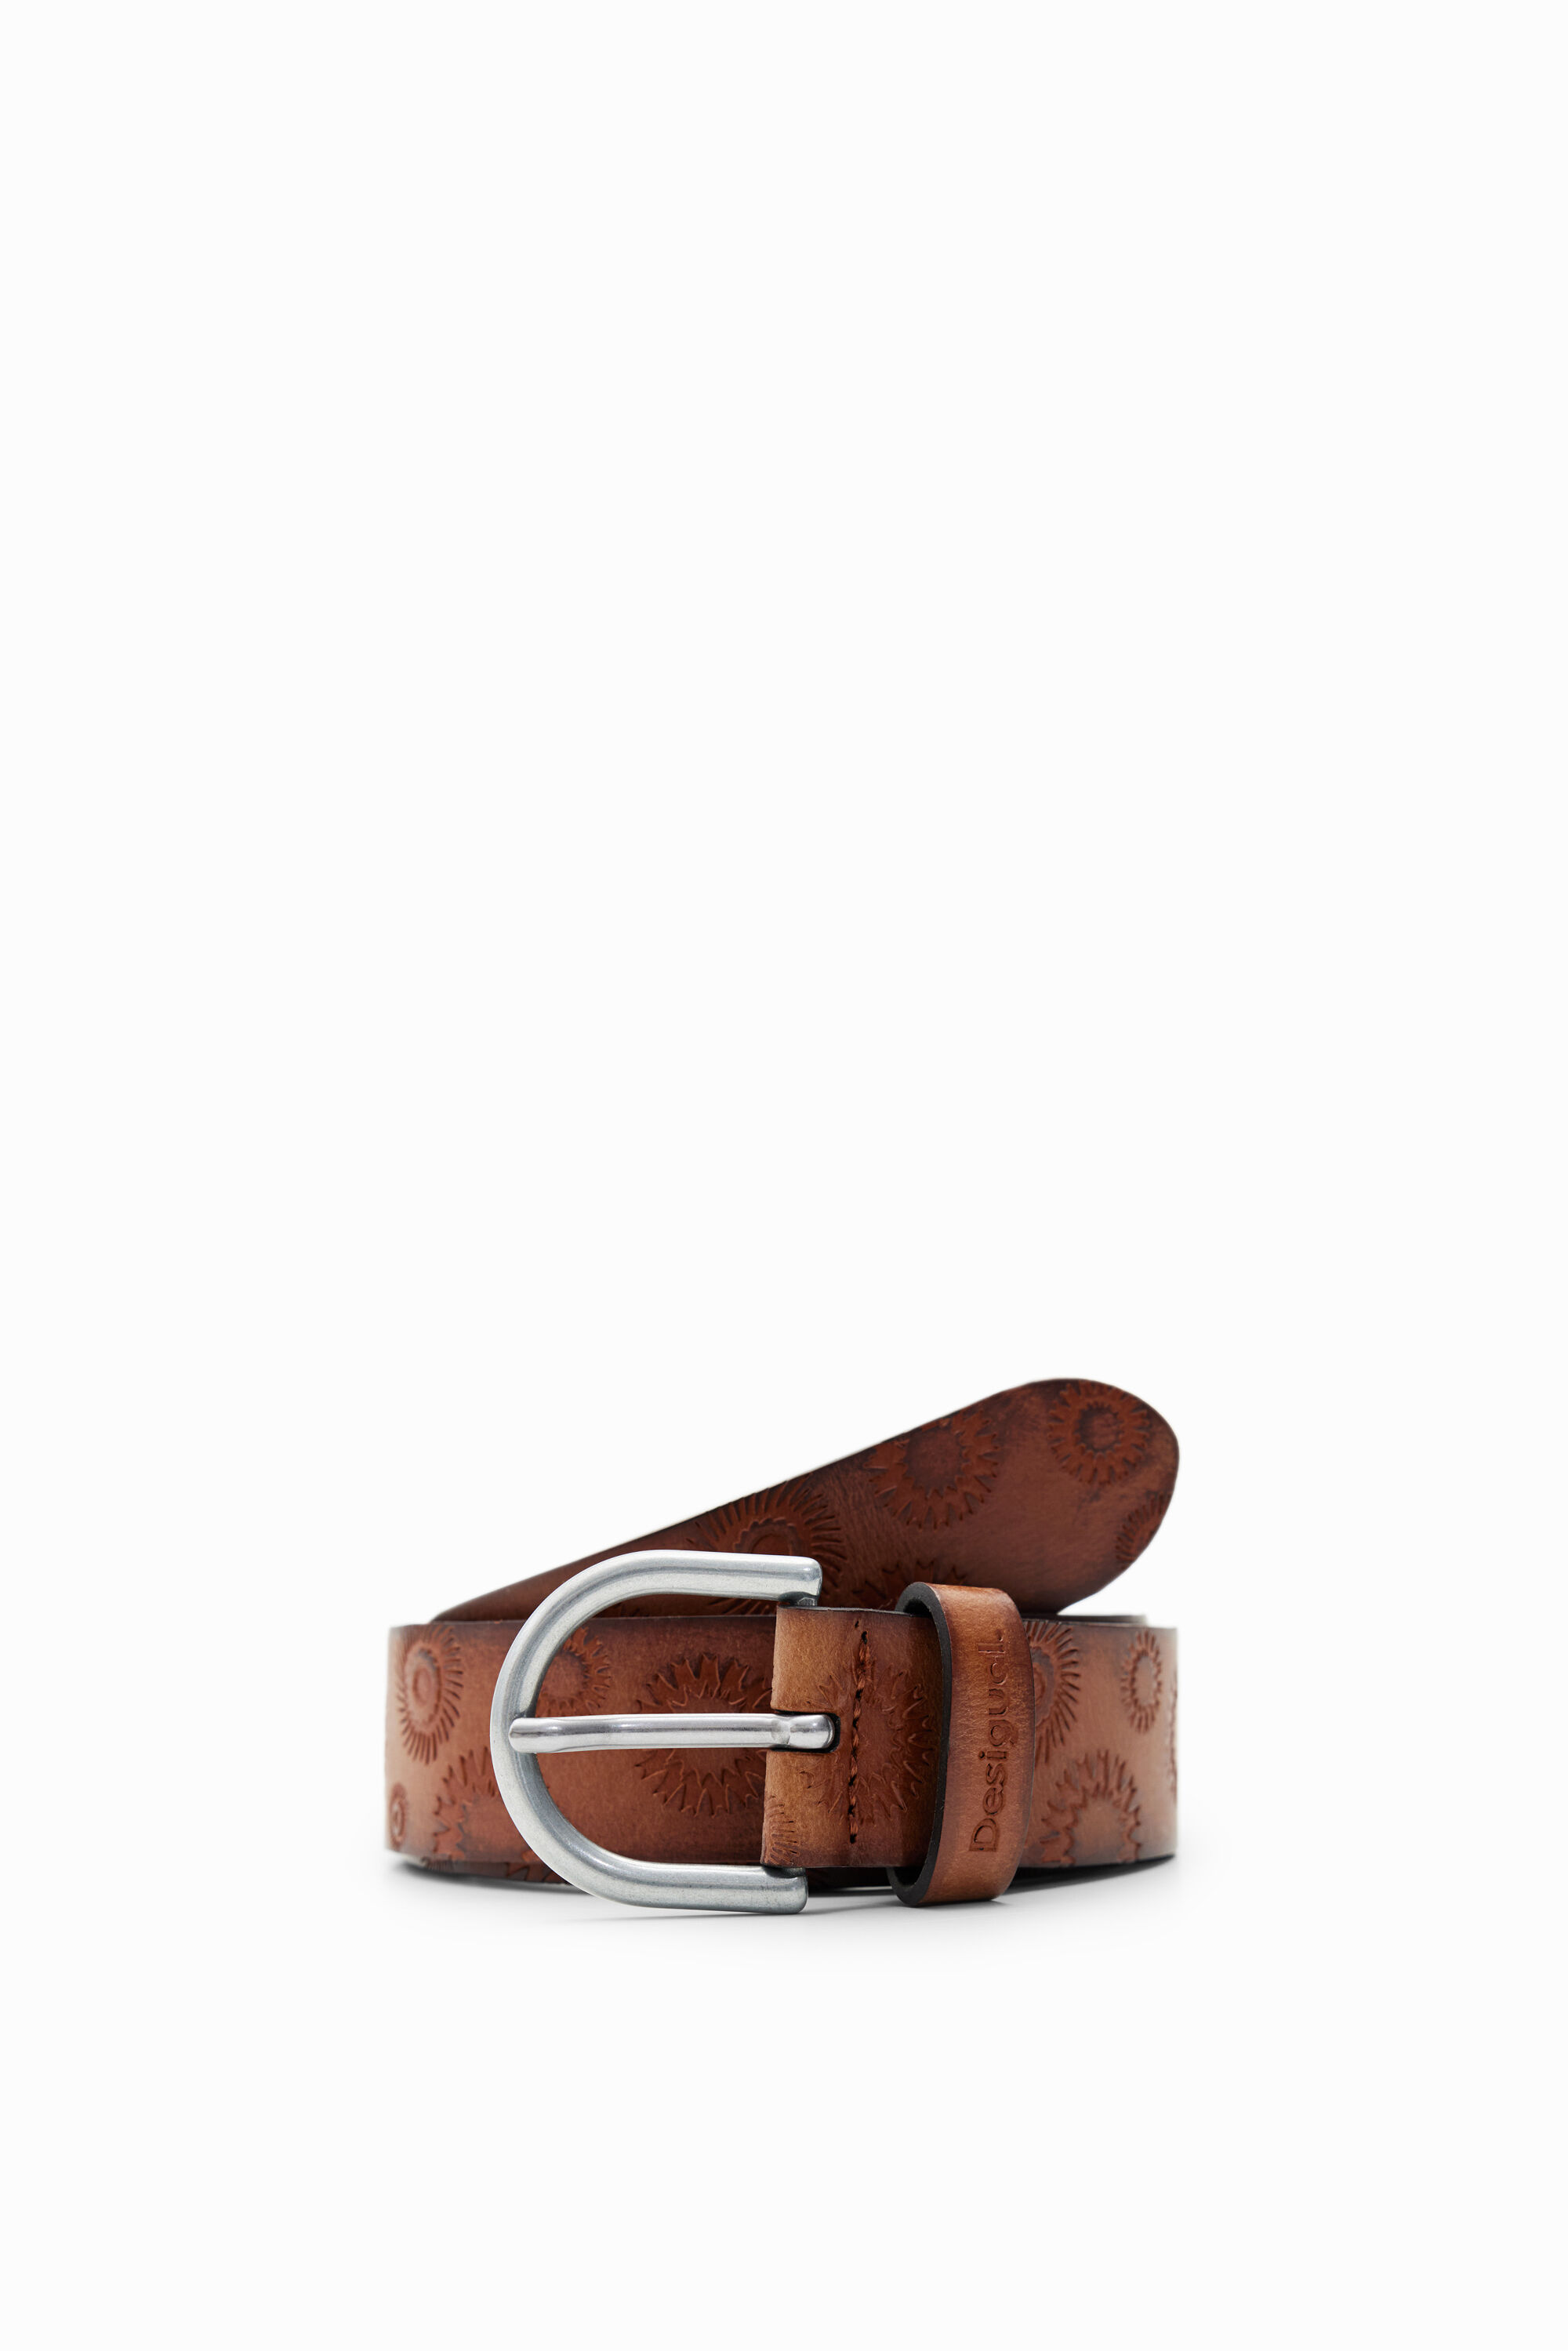 Geometric leather belt - BROWN - 85